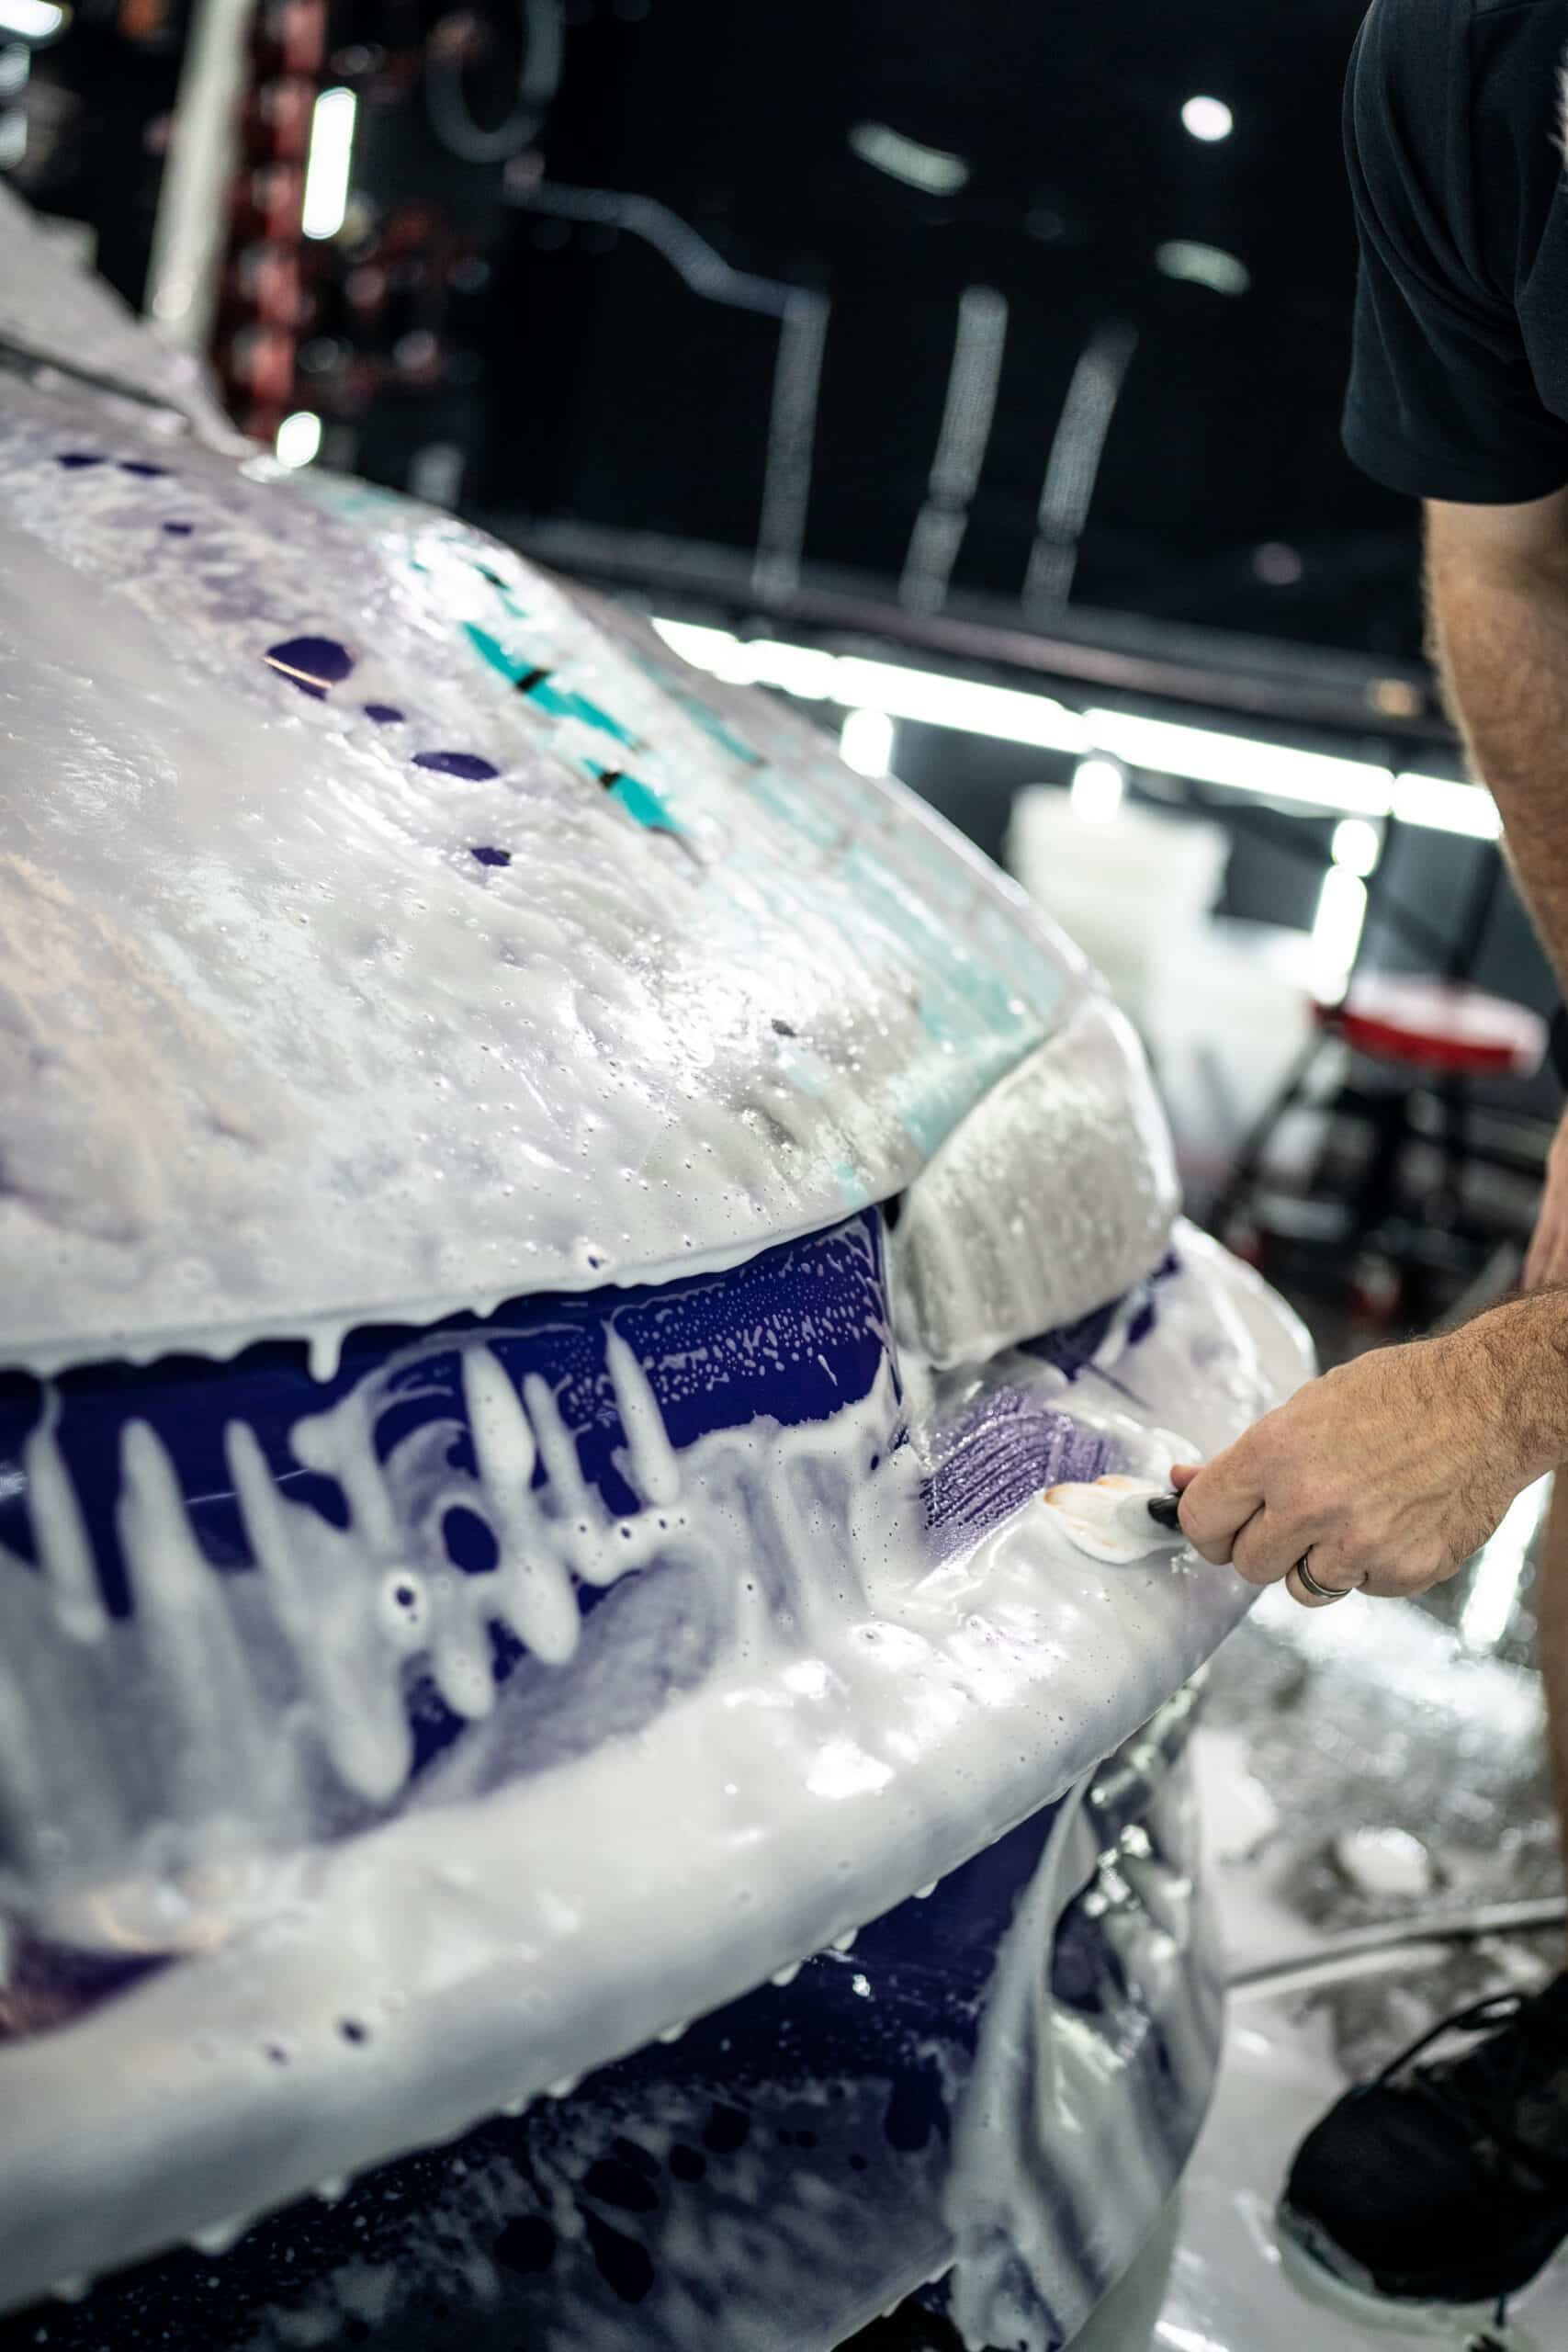 A man is washing a purple car with foam.